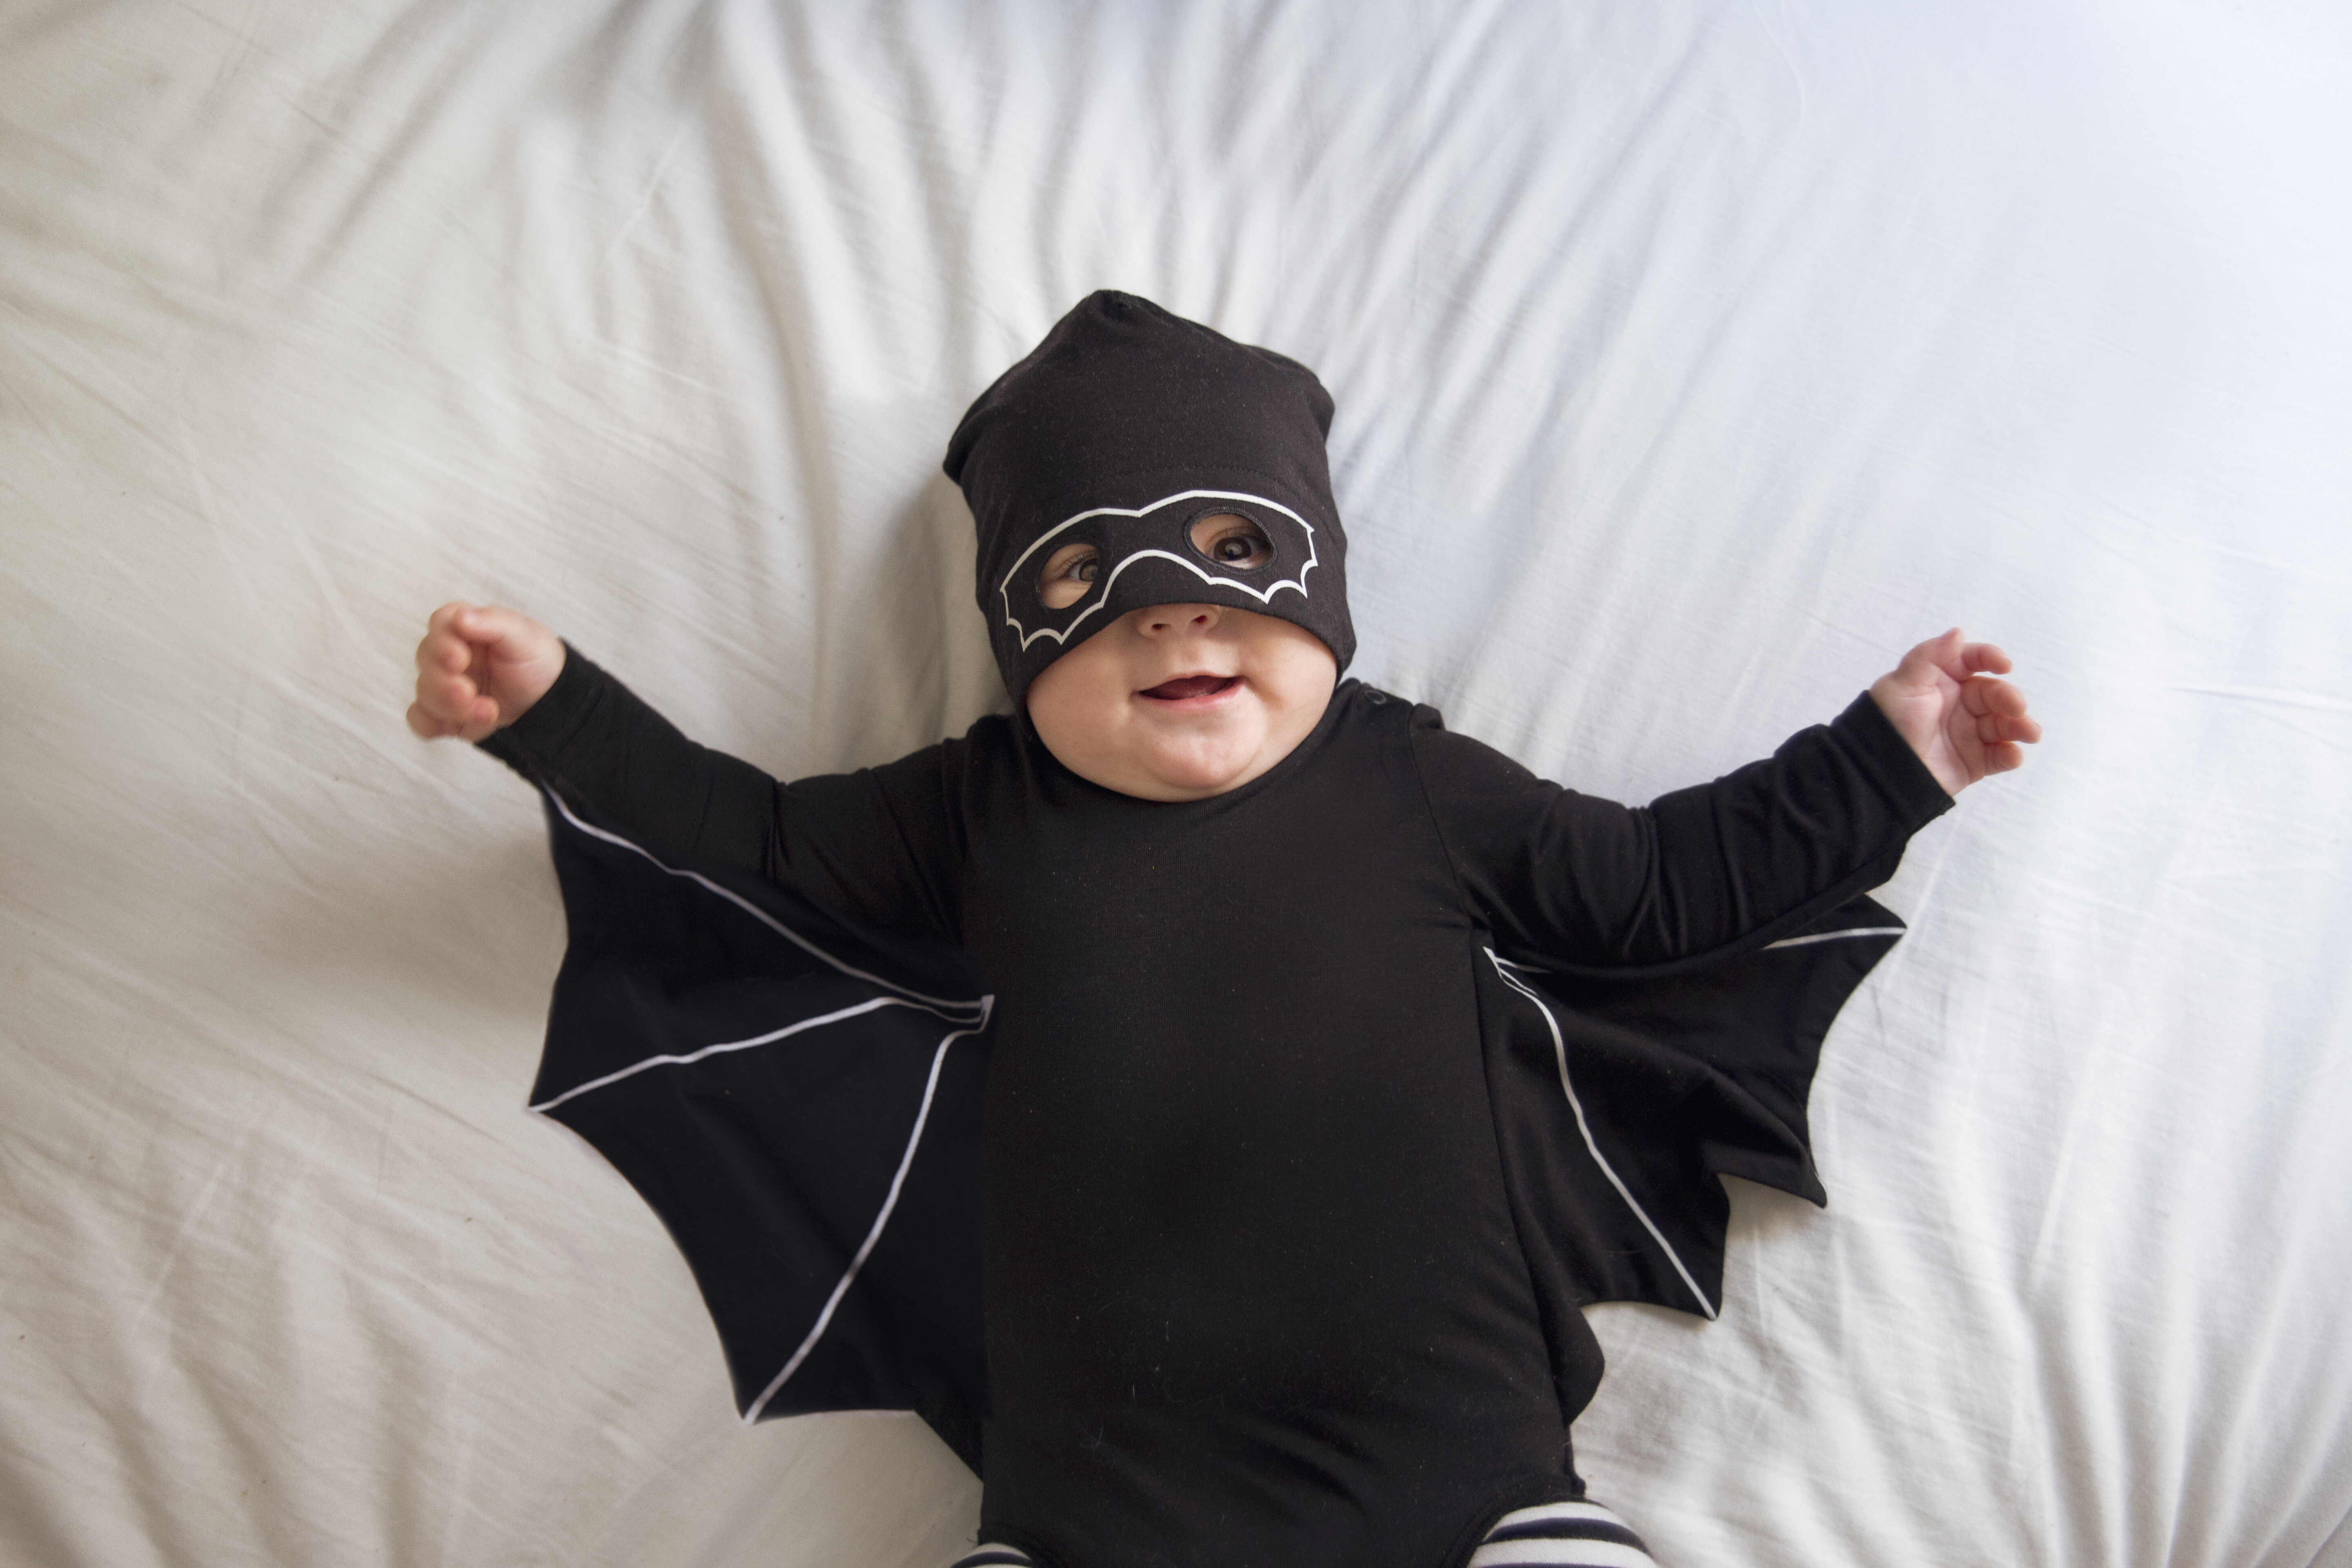 popular baby costumes